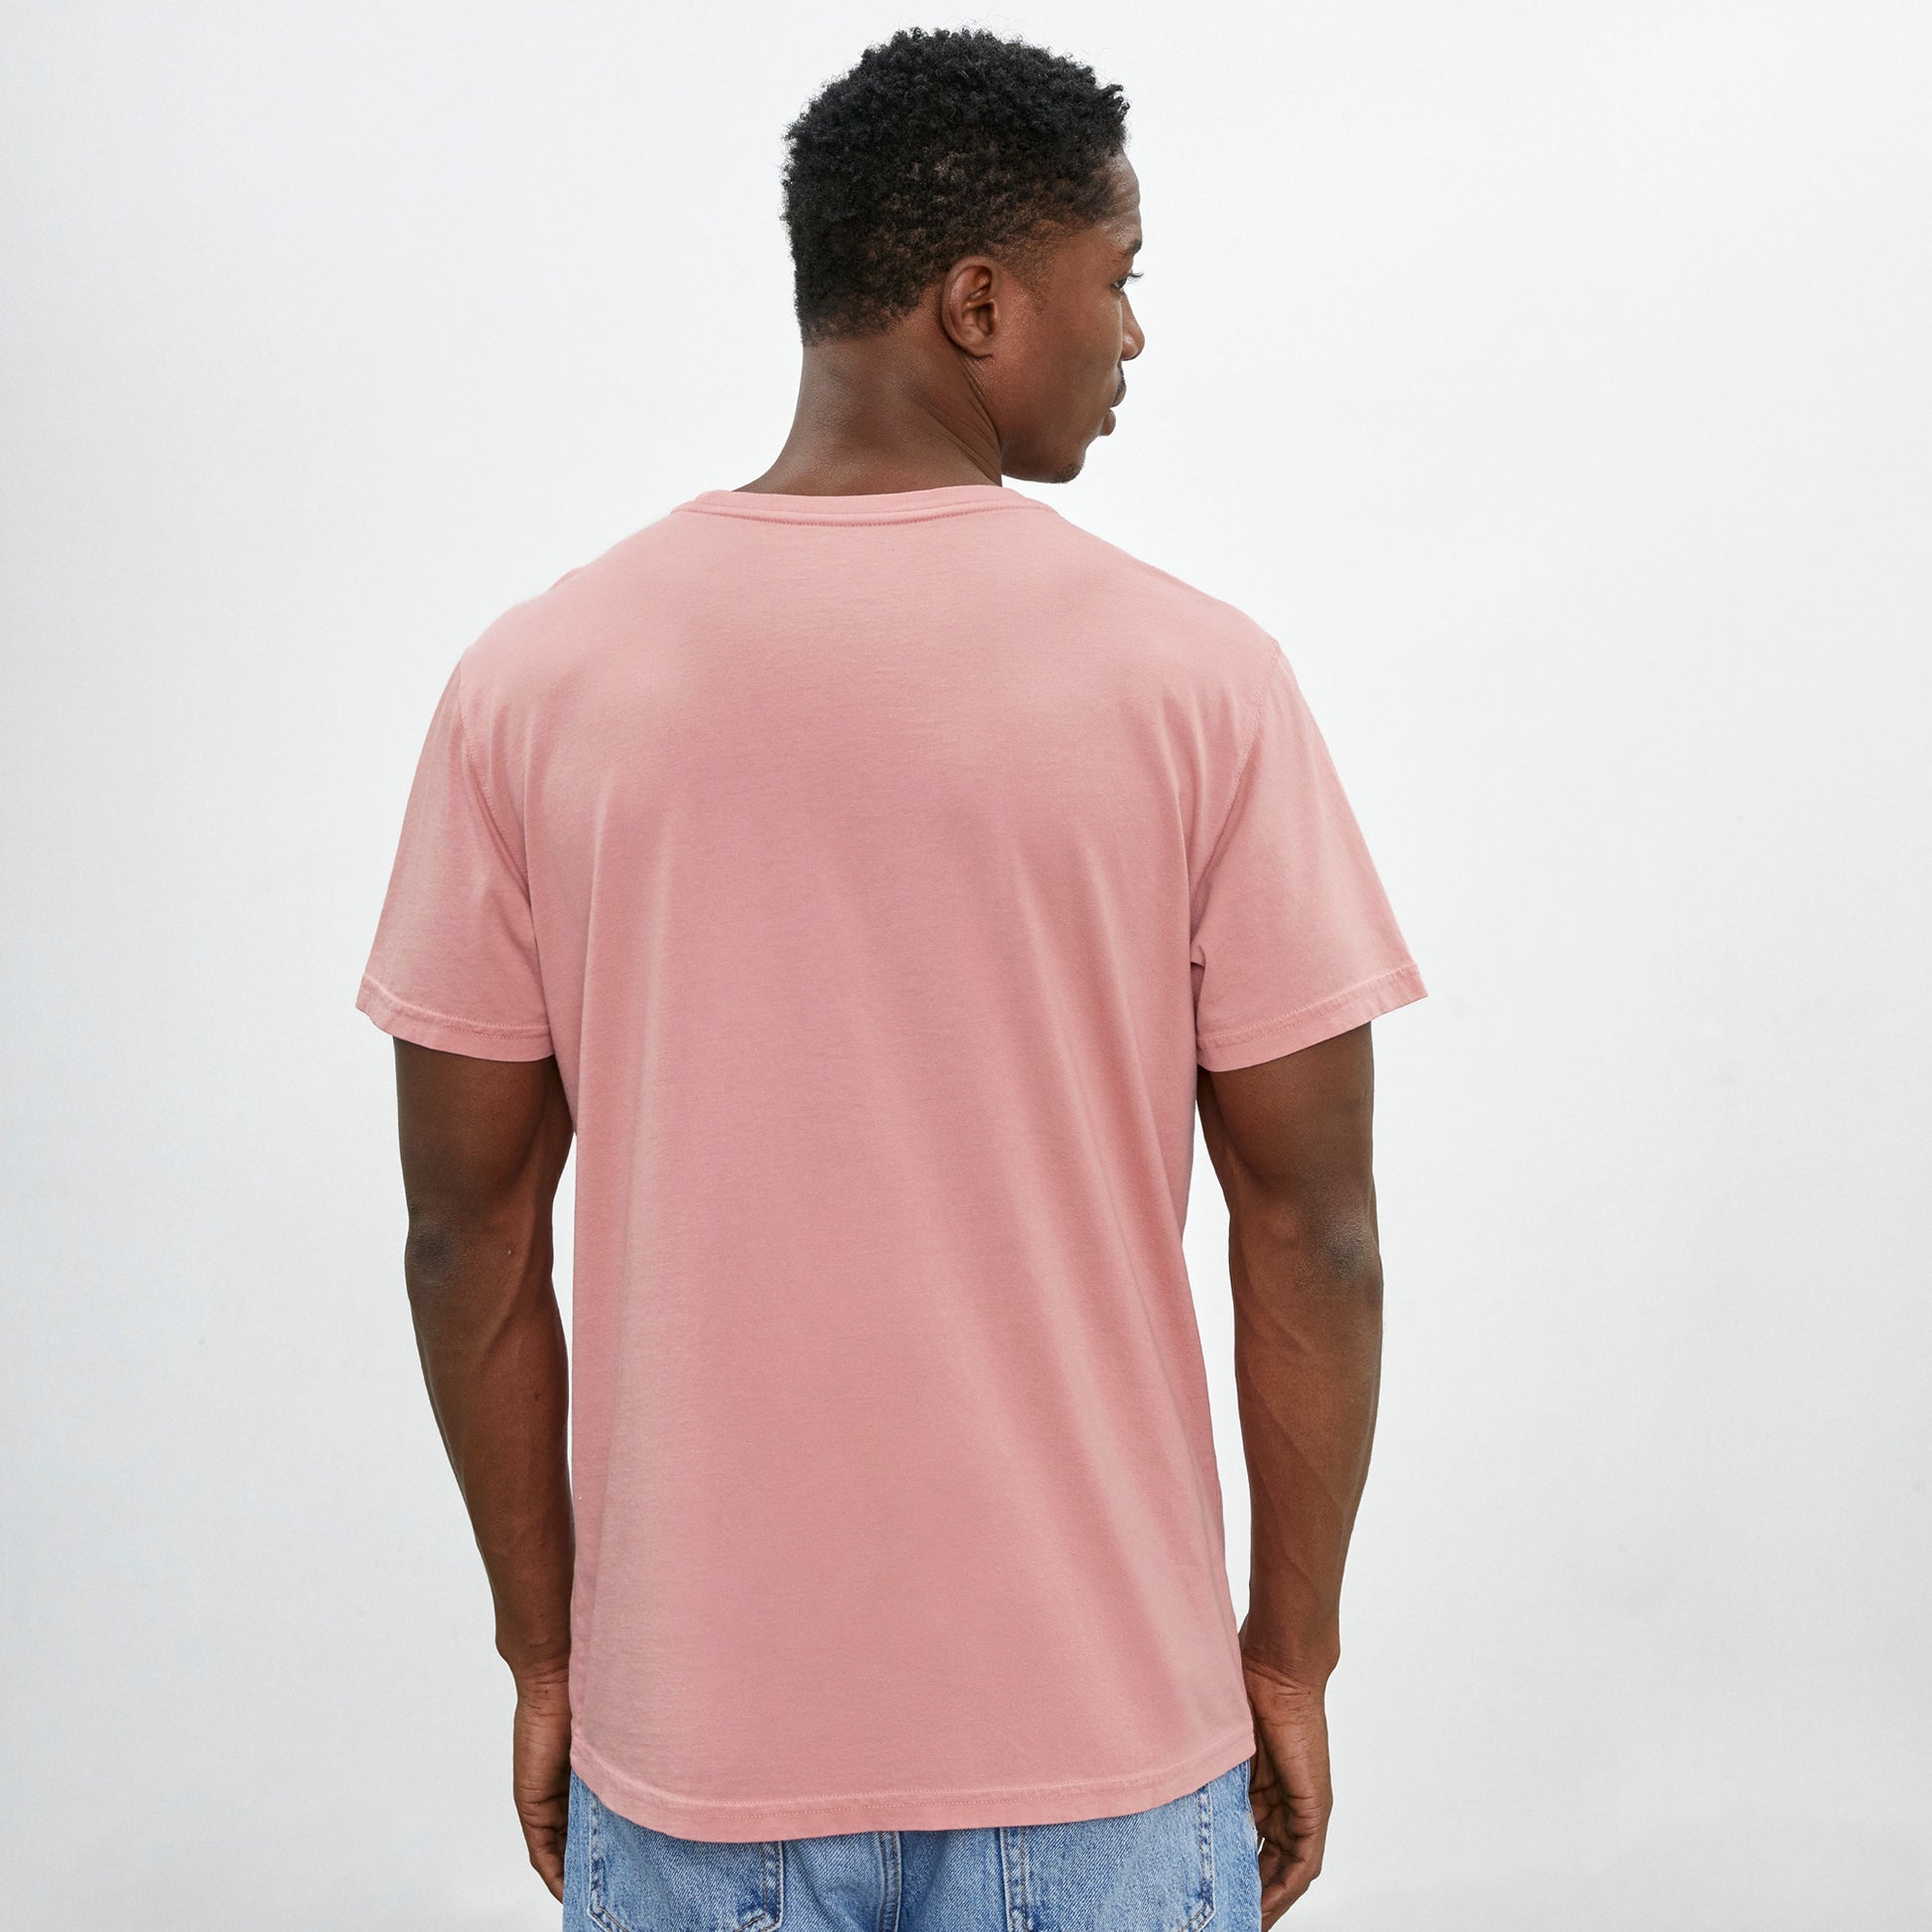 Polo rosa coral de cuello redondo y manga corta de algodón Pima, vista posterior con modelo